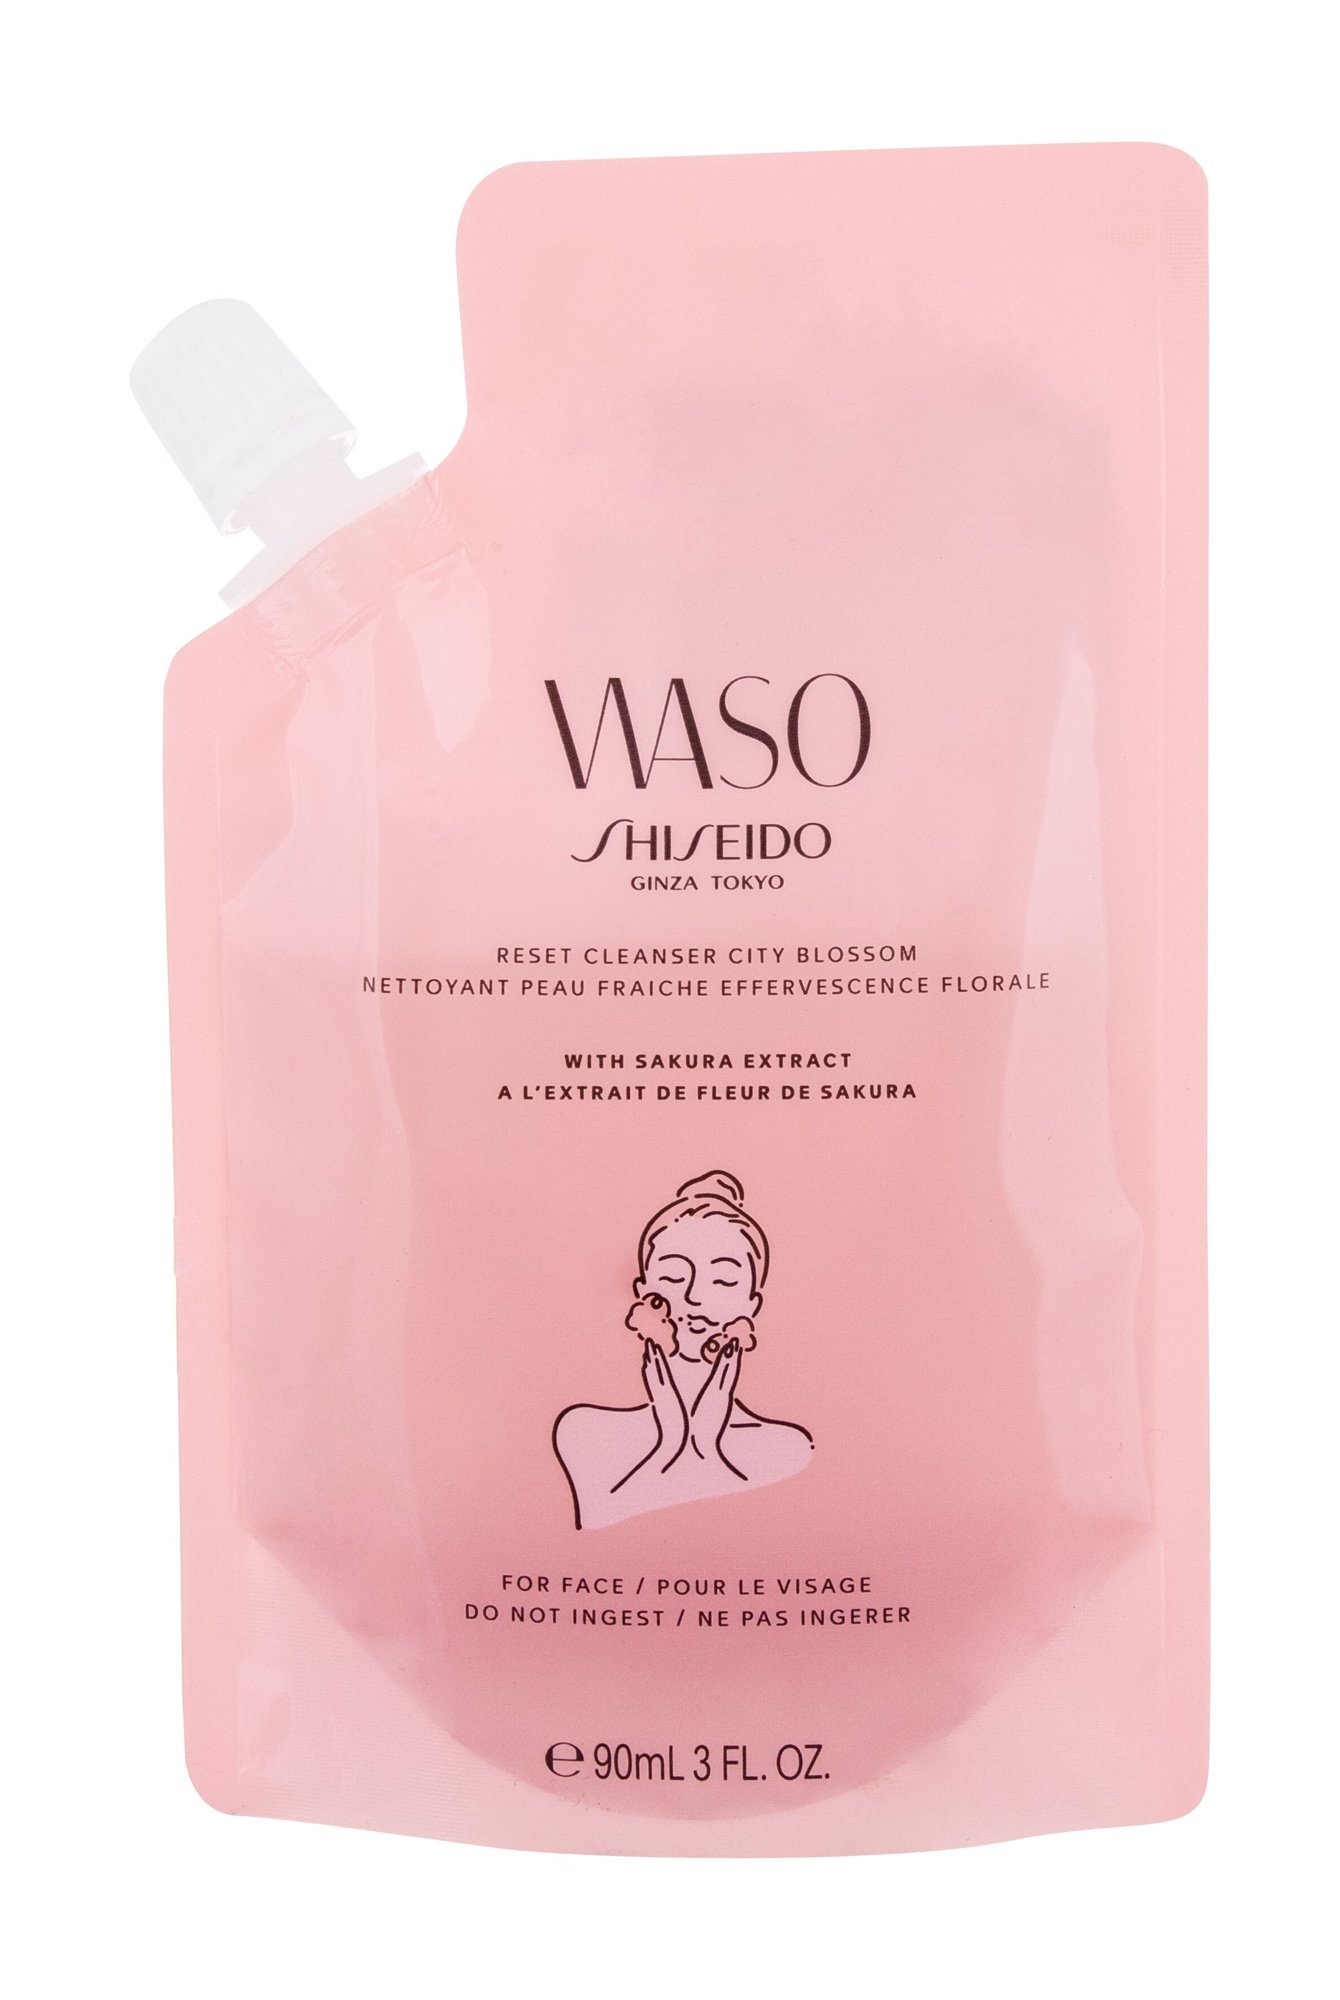 Shiseido Waso Reset Cleanser City Blossom veido gelis